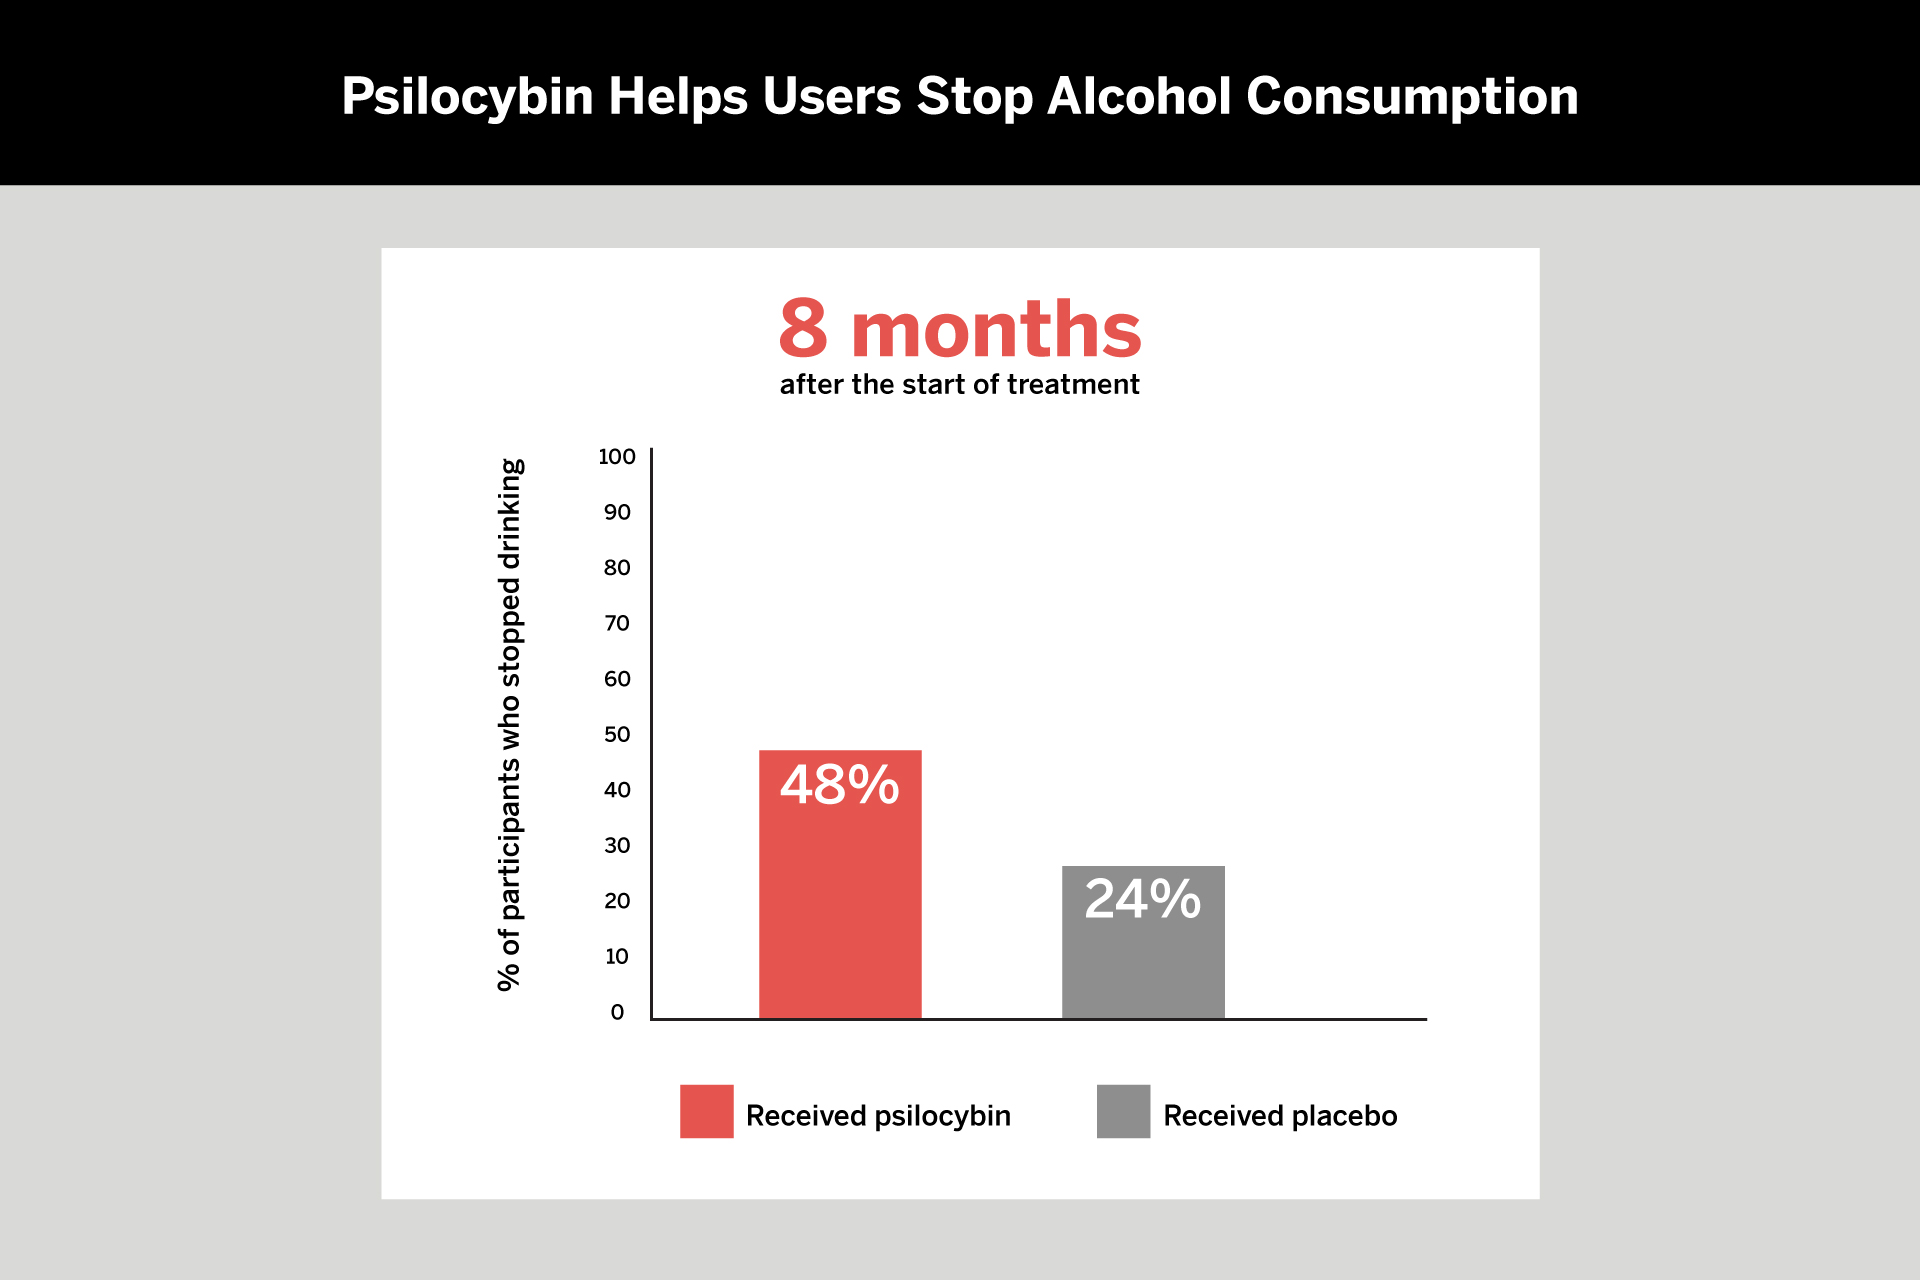 psilocybin helps users stop alcohol consumption